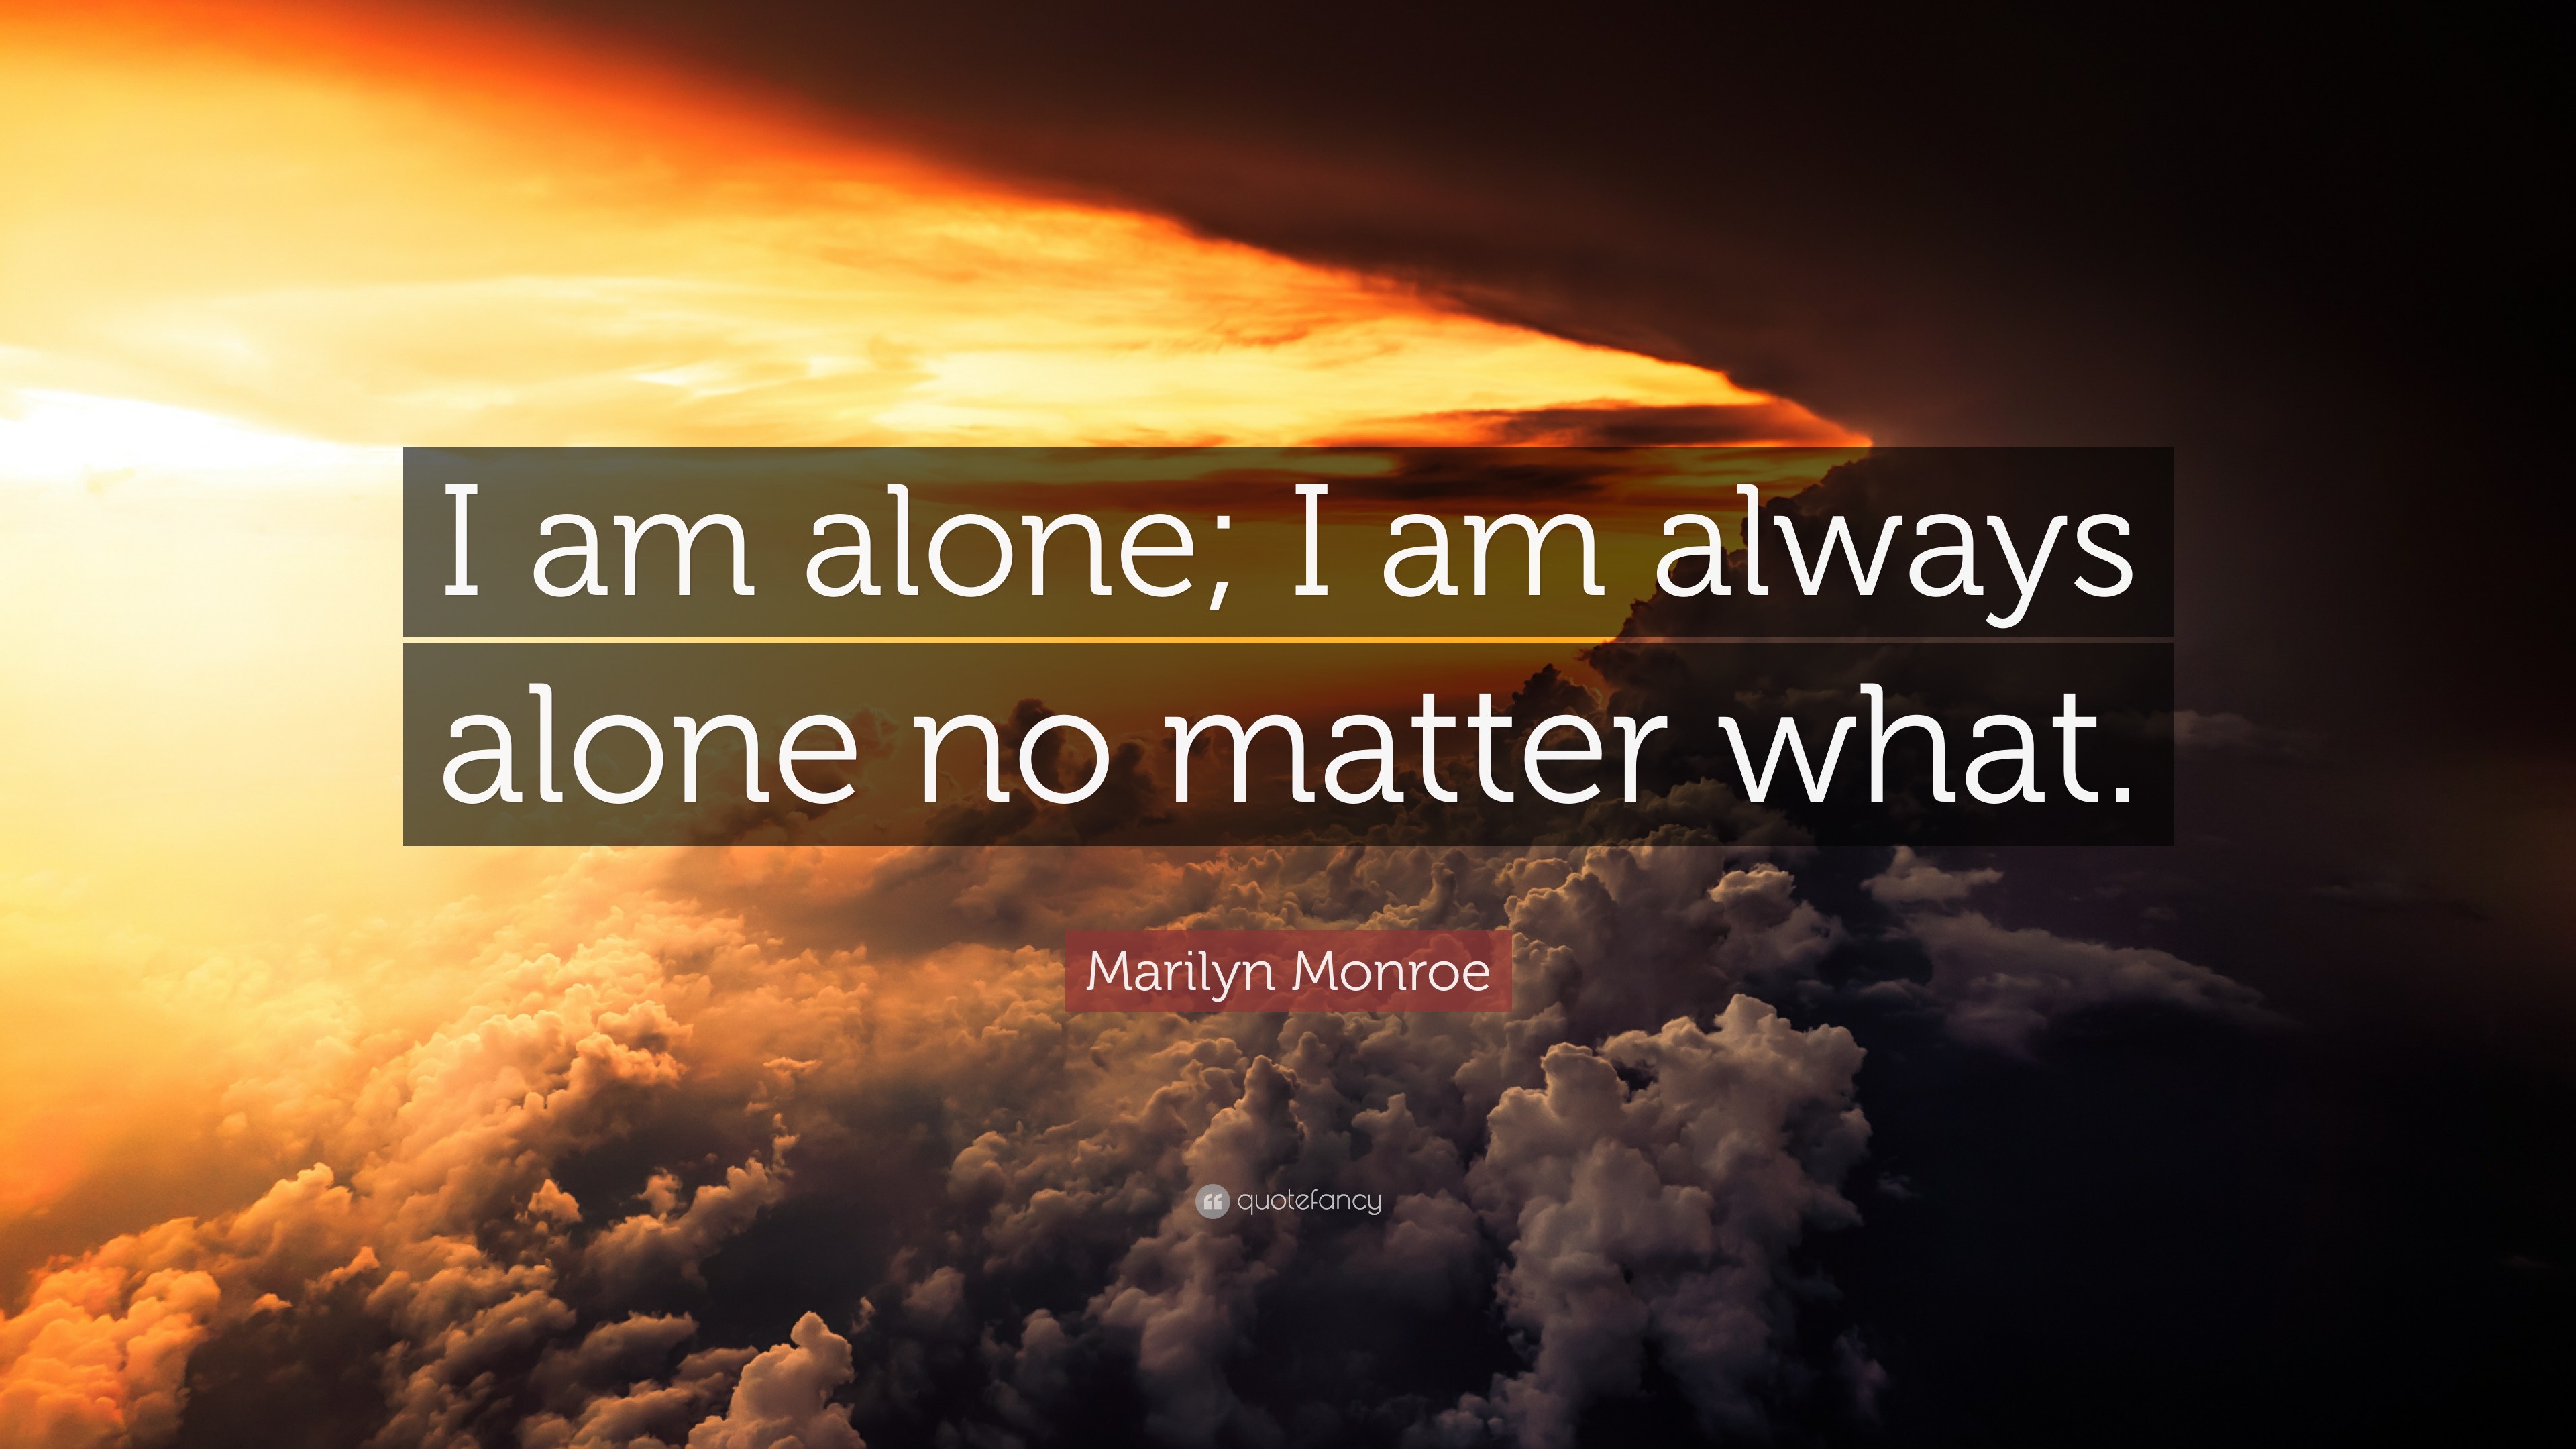 Marilyn Monroe Quote: "I am alone; I am always alone no ...